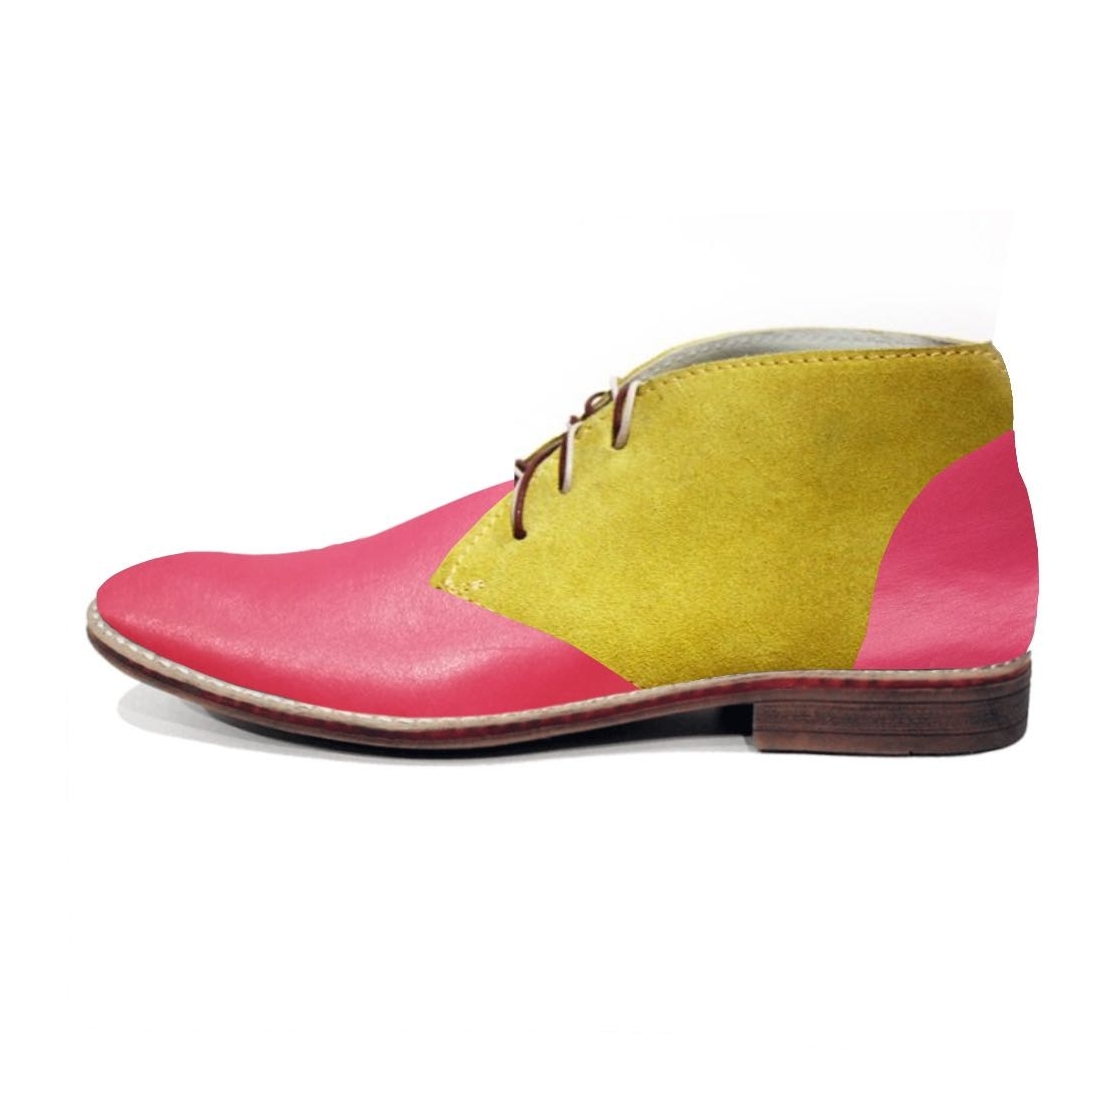 Modello Primavello - Chukka Botas - Handmade Colorful Italian Leather Shoes